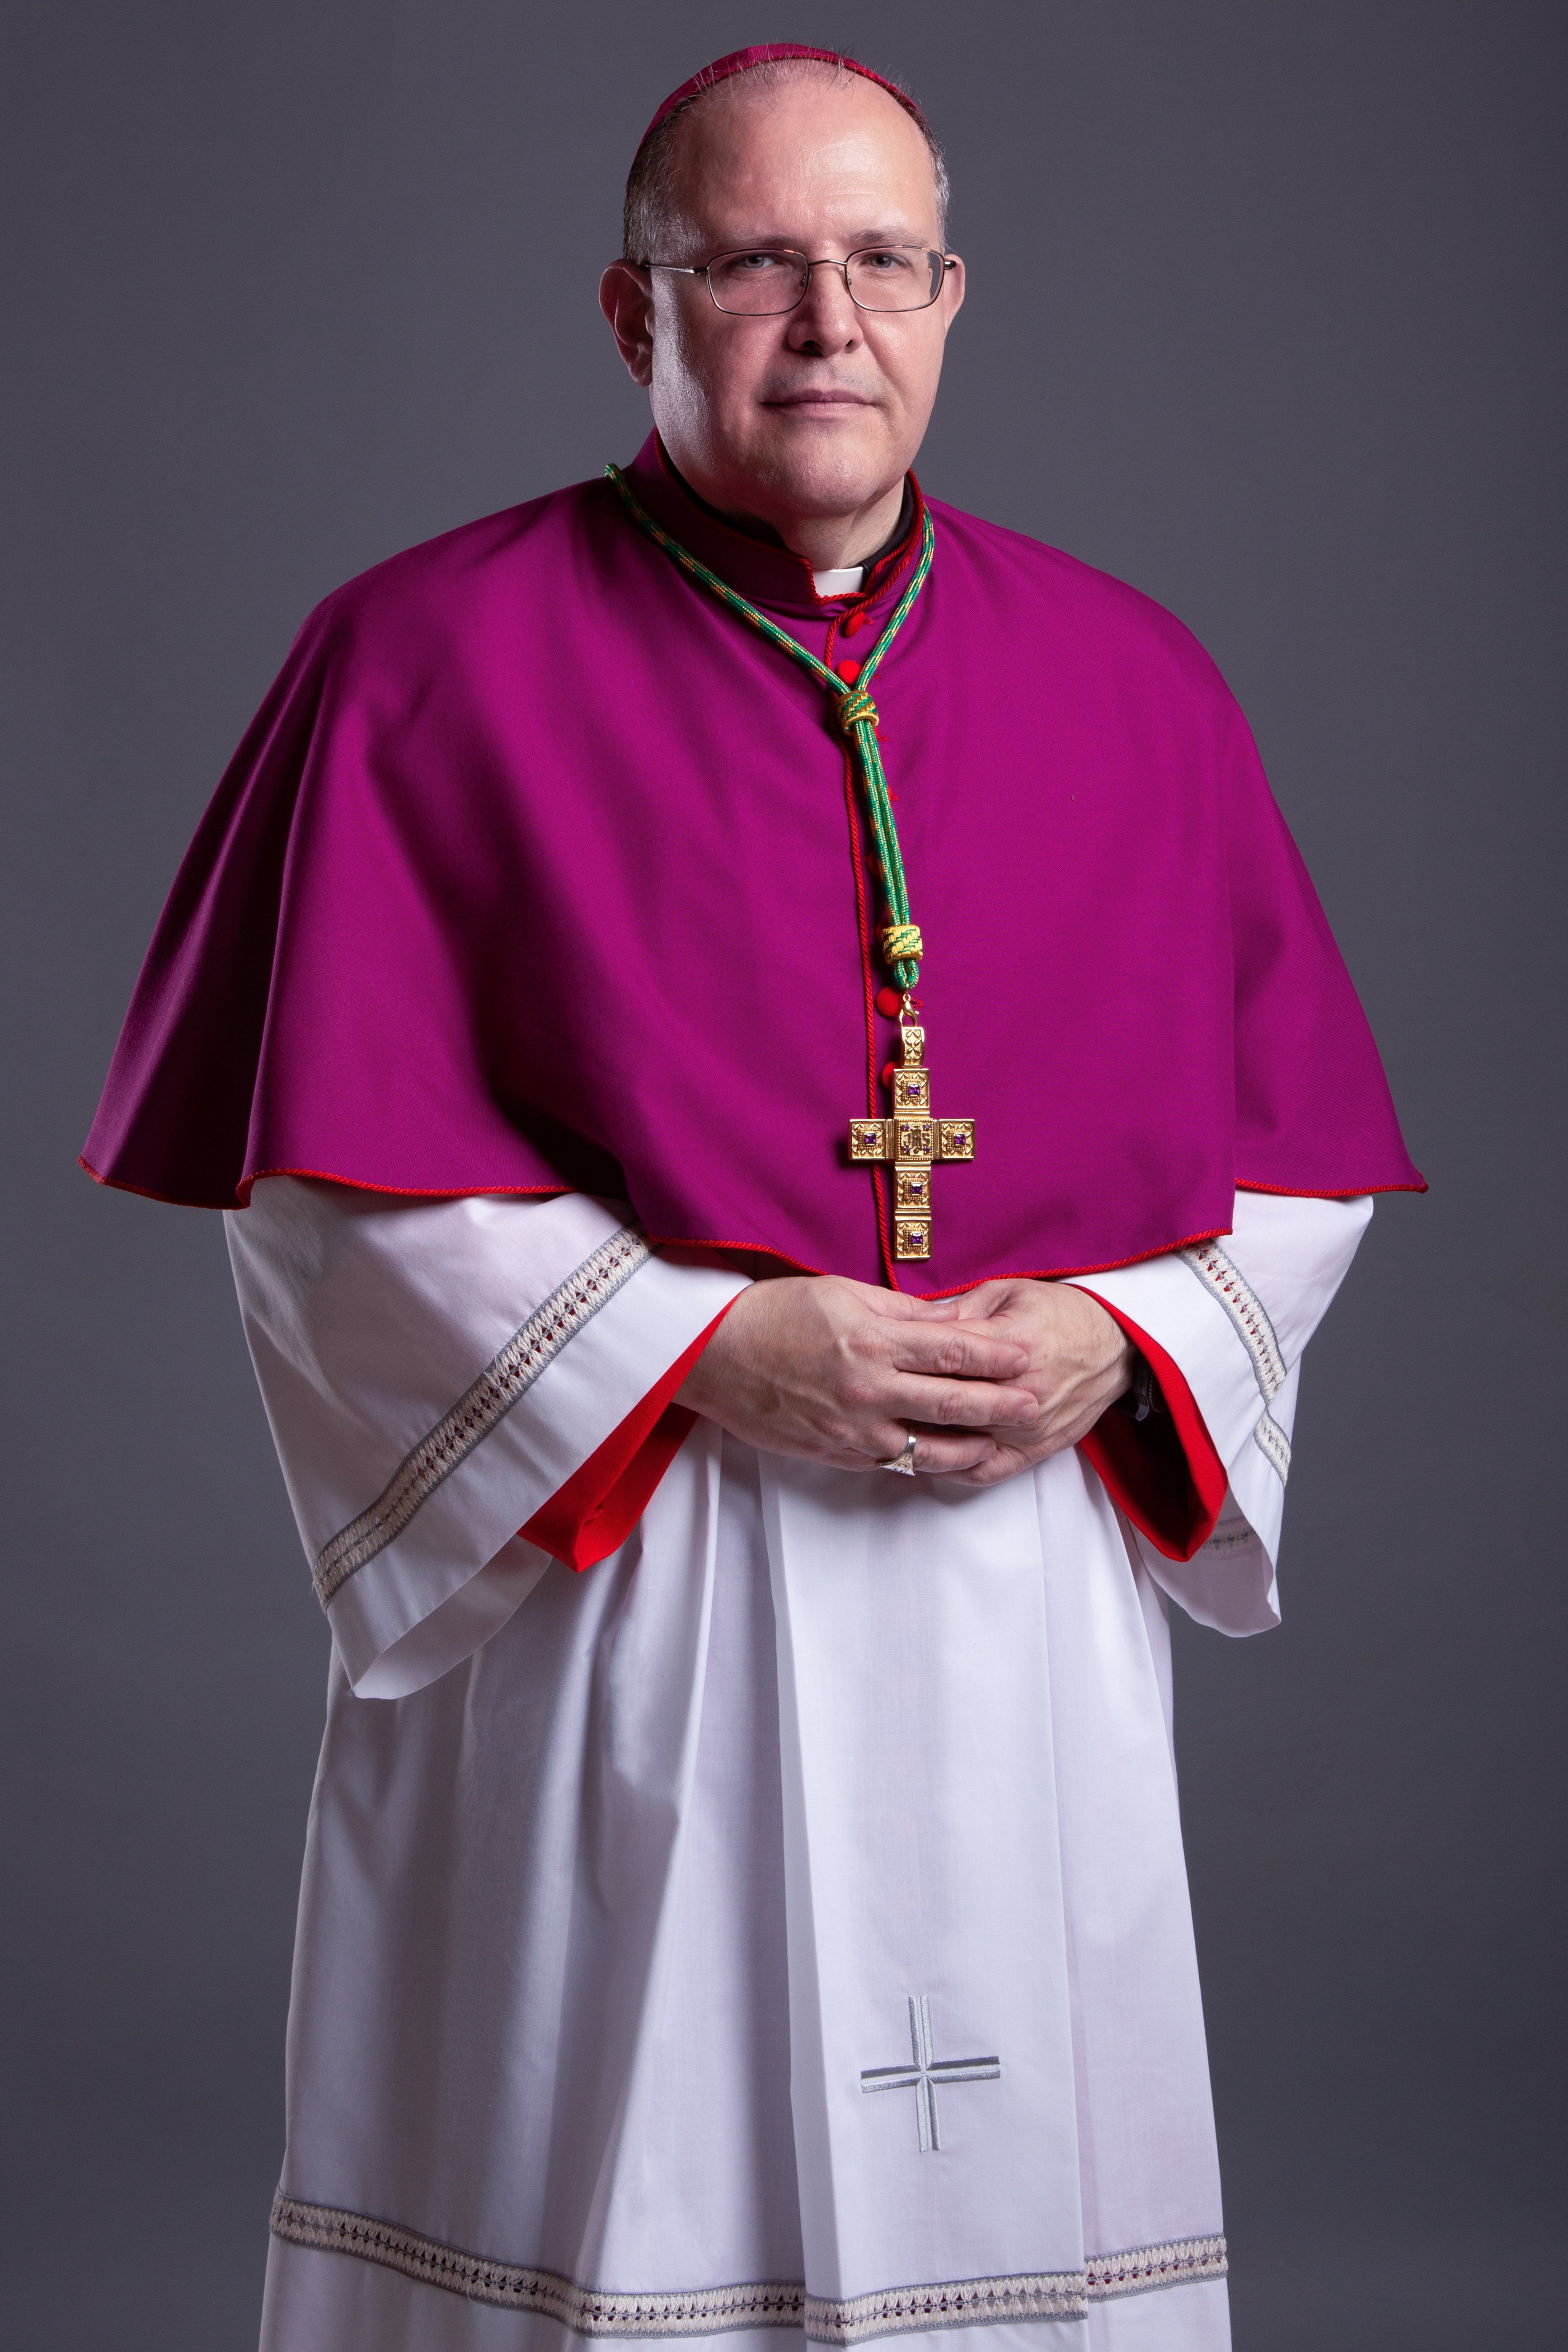 Bishop Camilleri